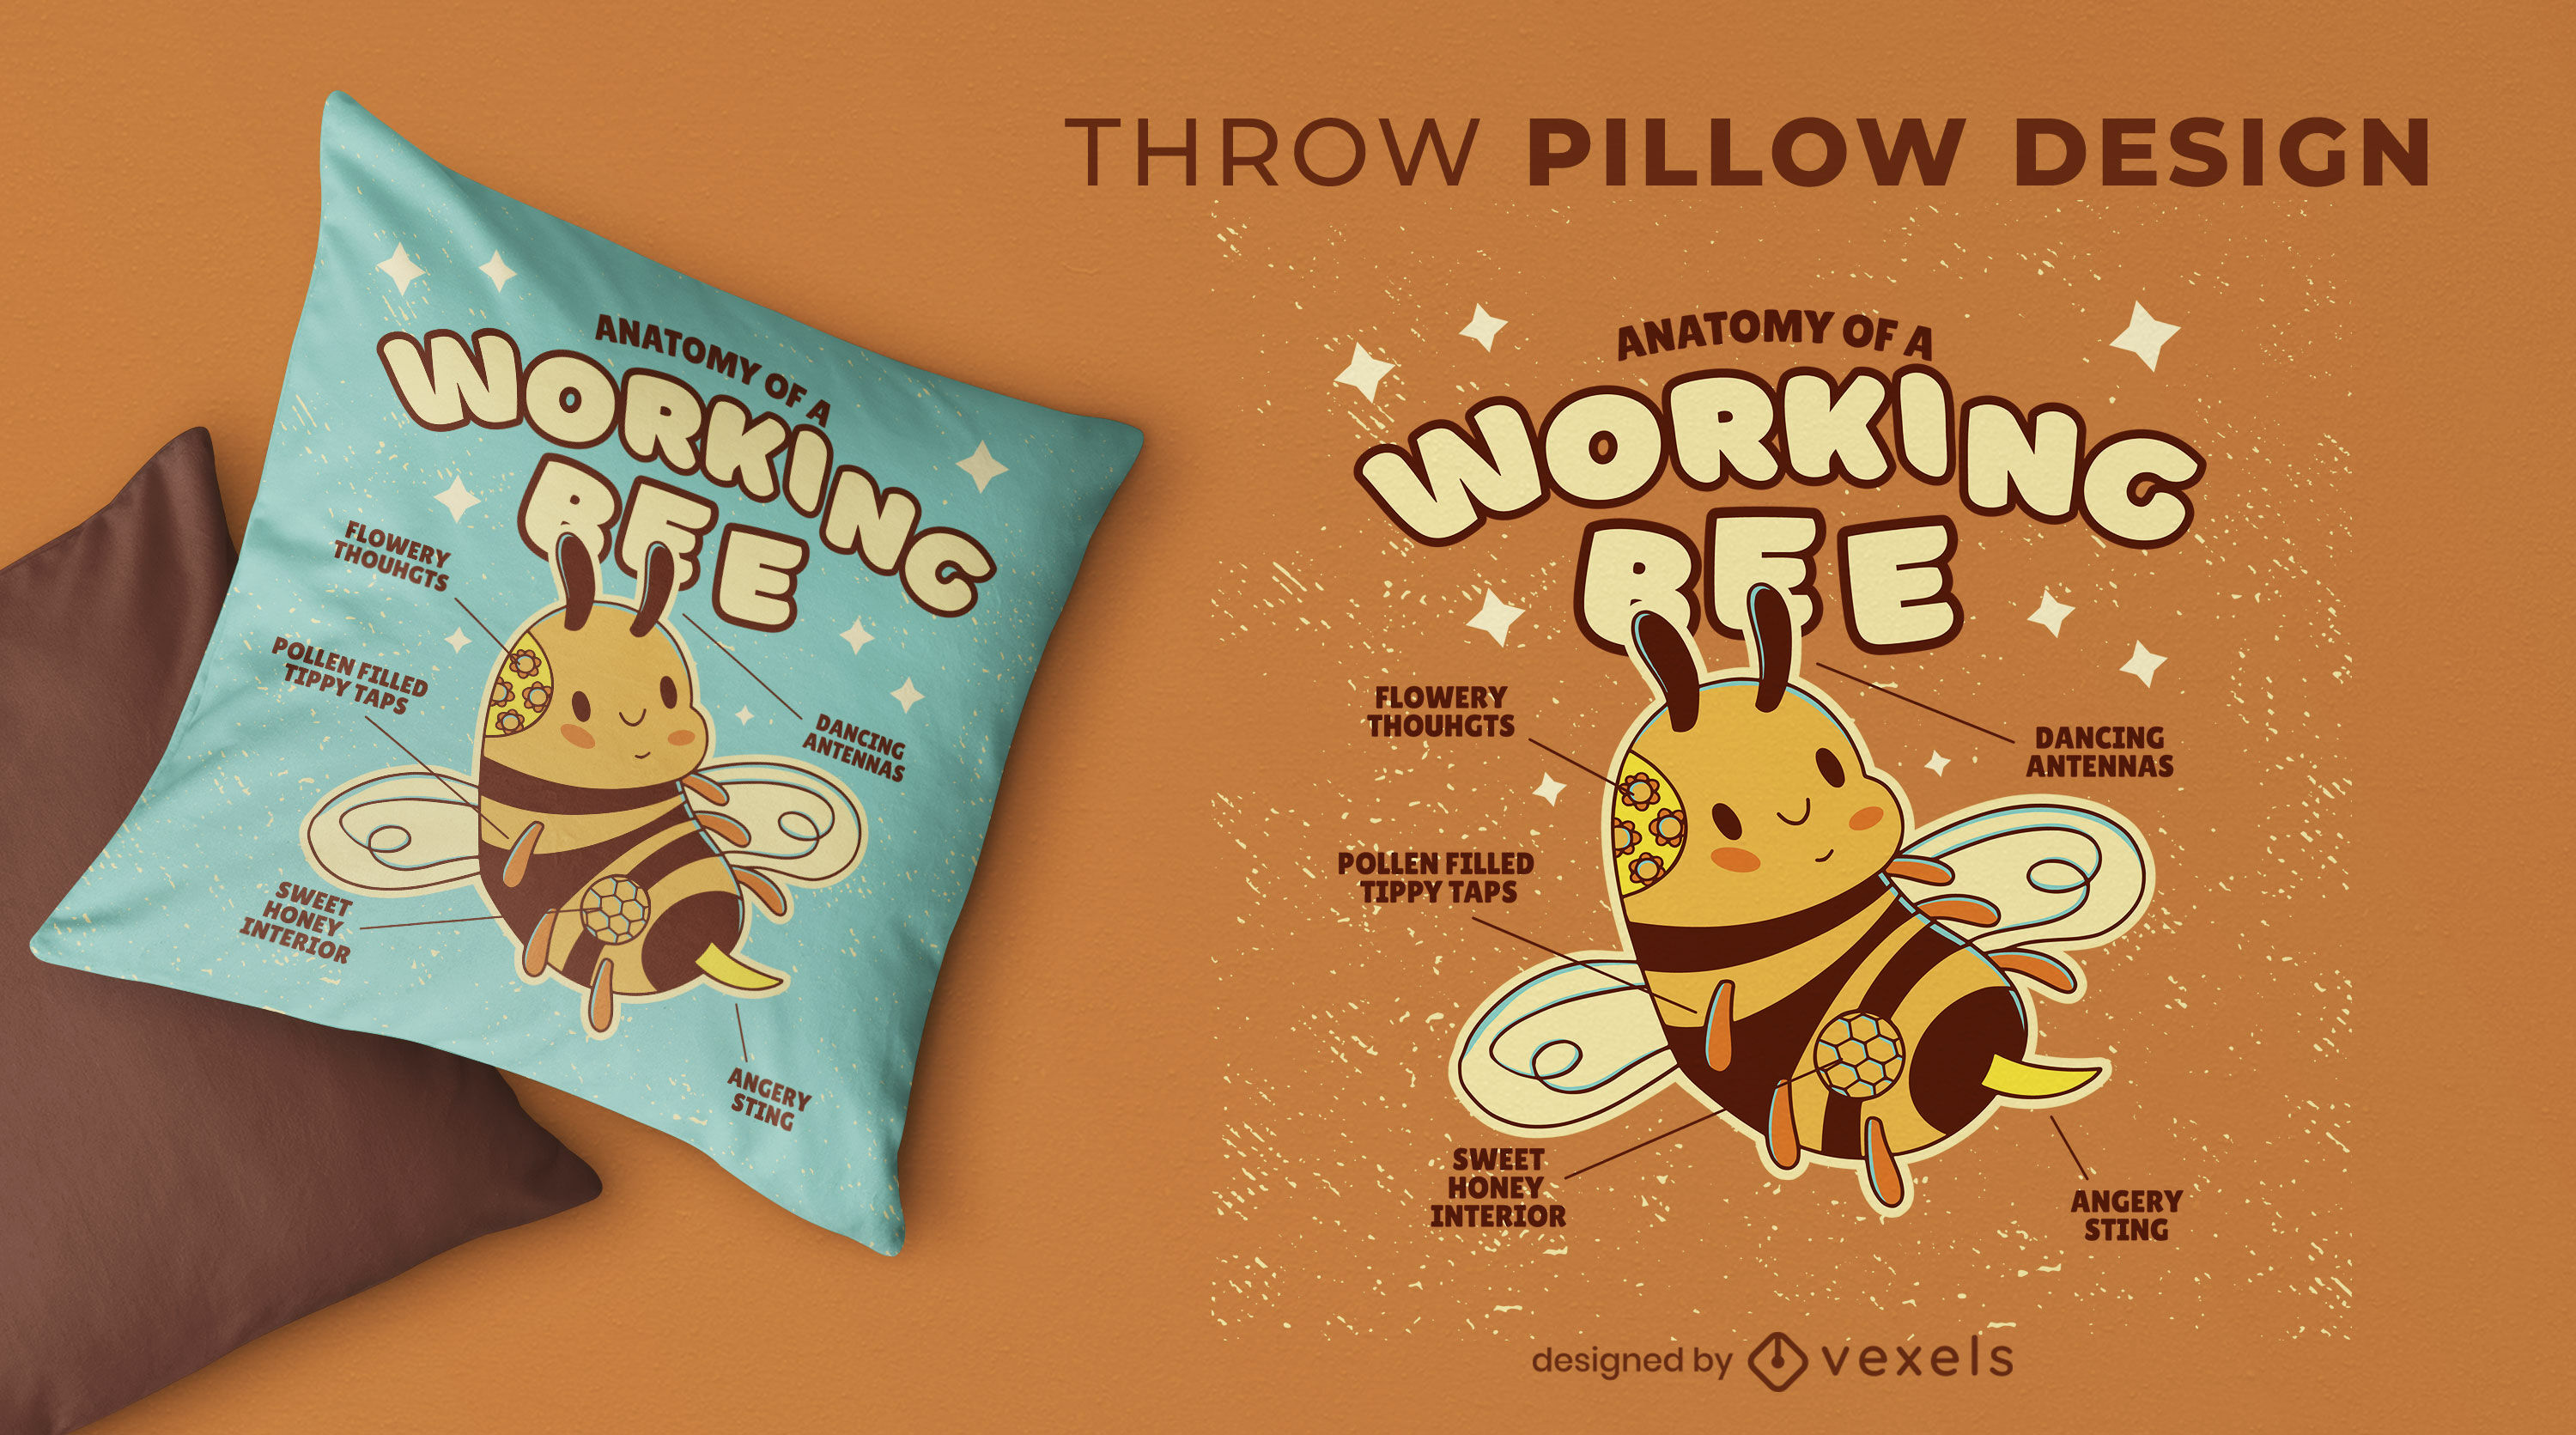 Working bee anatomy throw pillow design